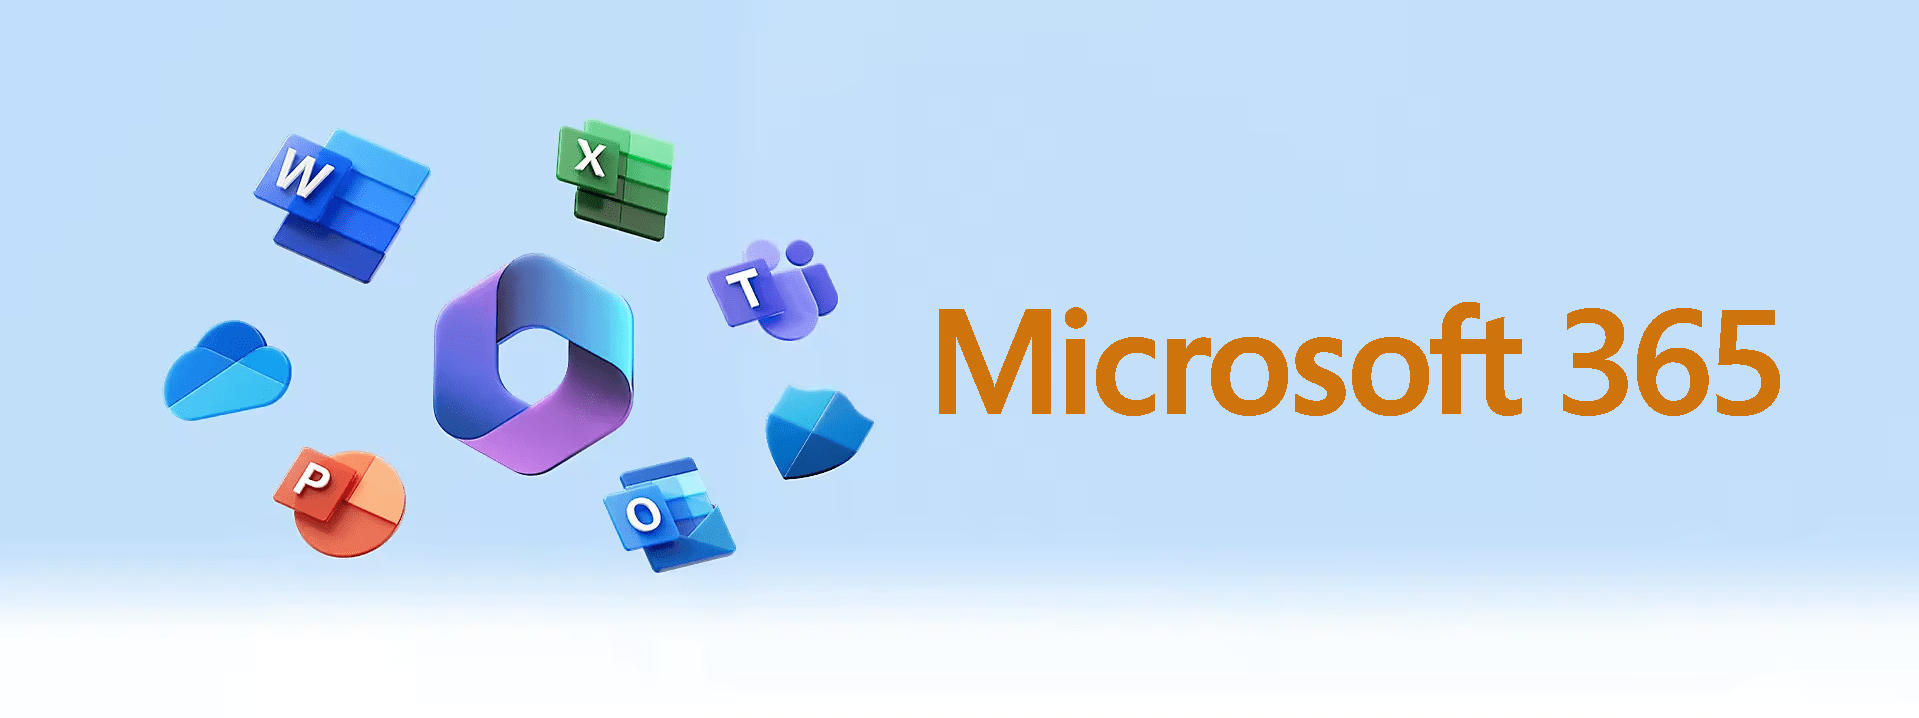 Iconos de Microsoft 365 